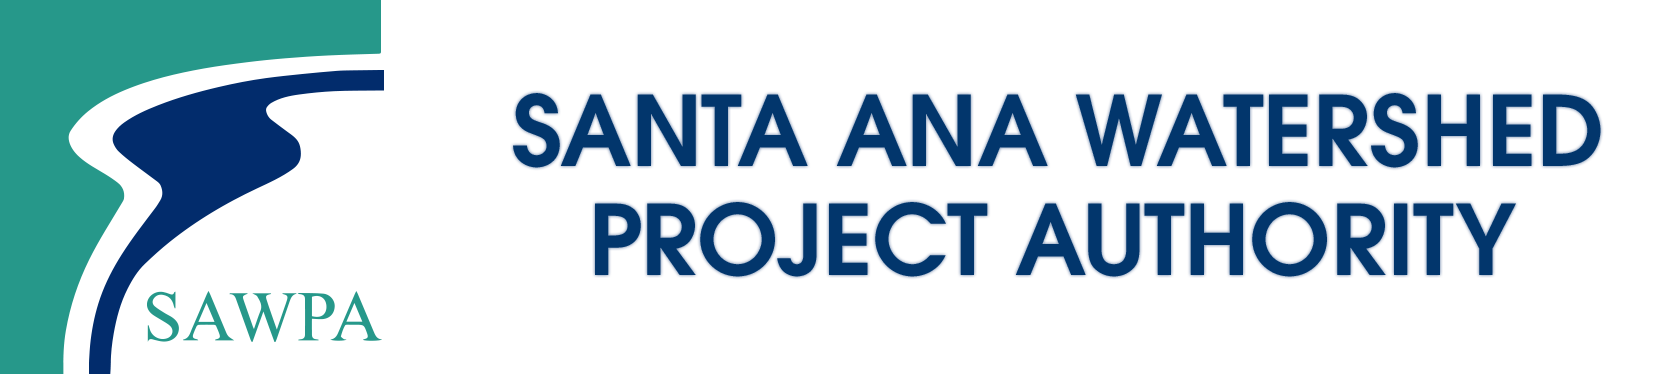 SAWPA – Santa Ana Watershed Project Authority